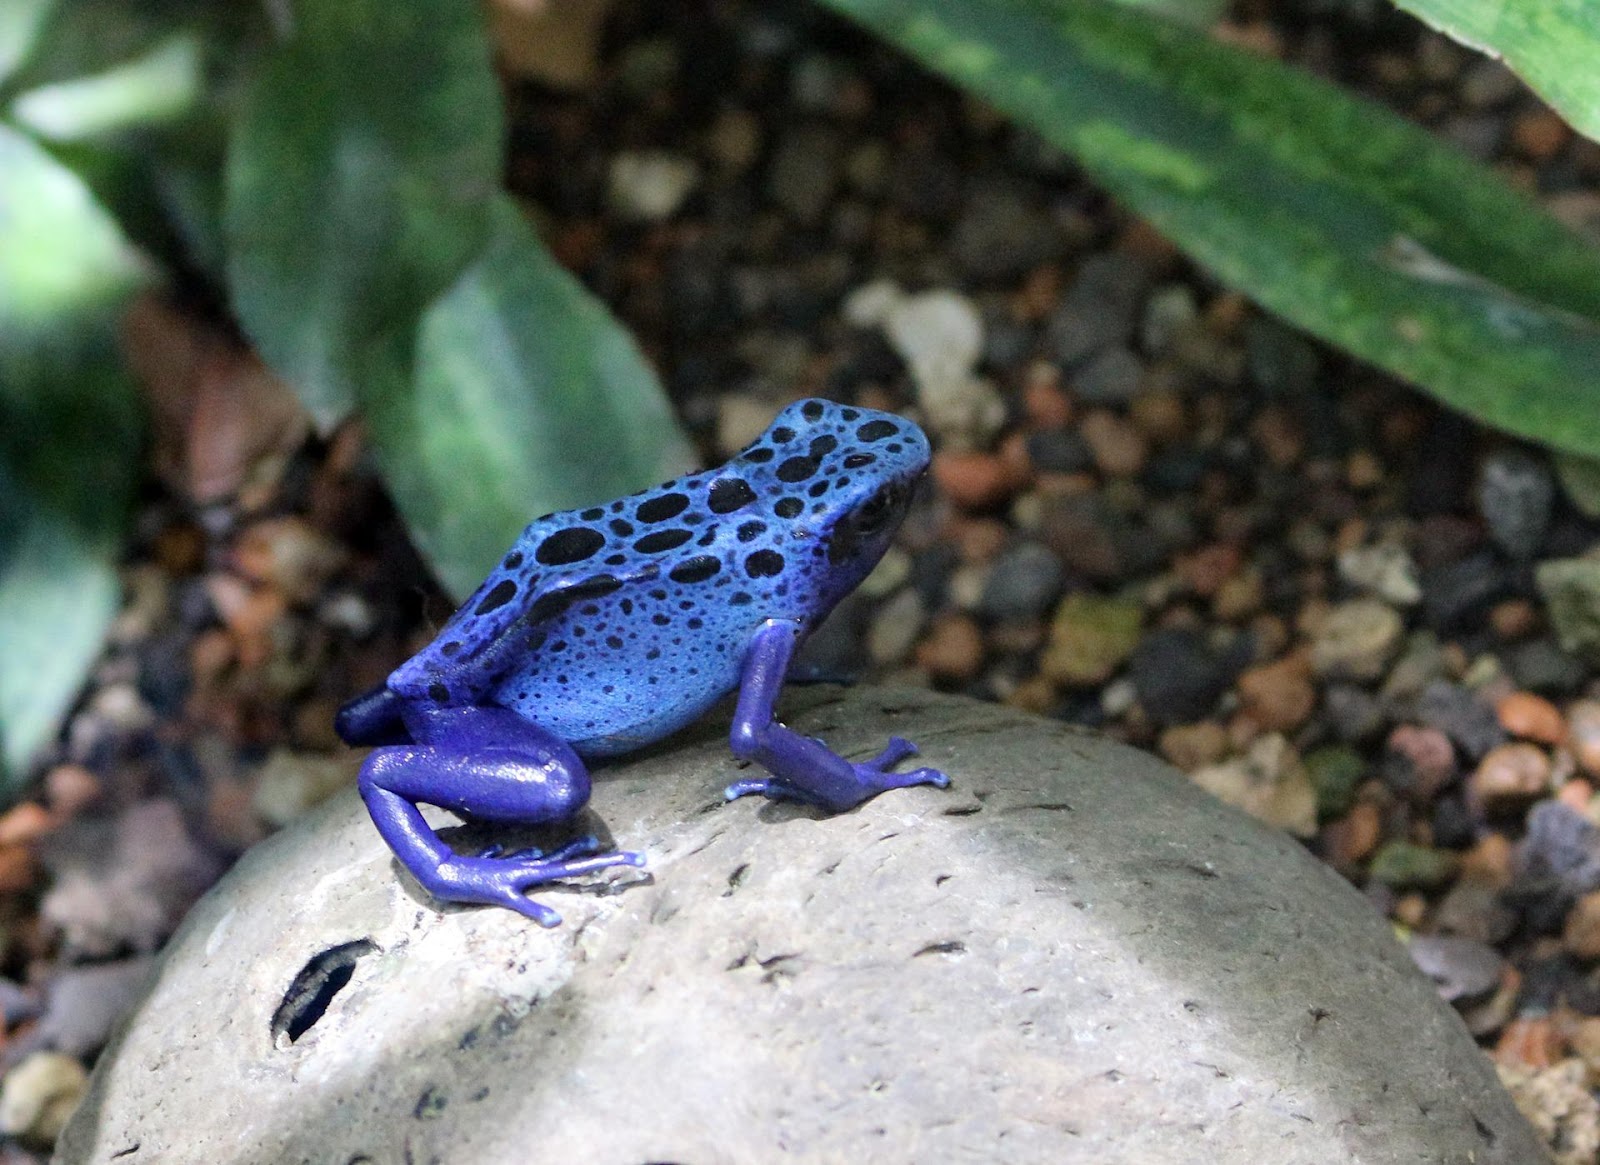 Blue dart frog on a rock